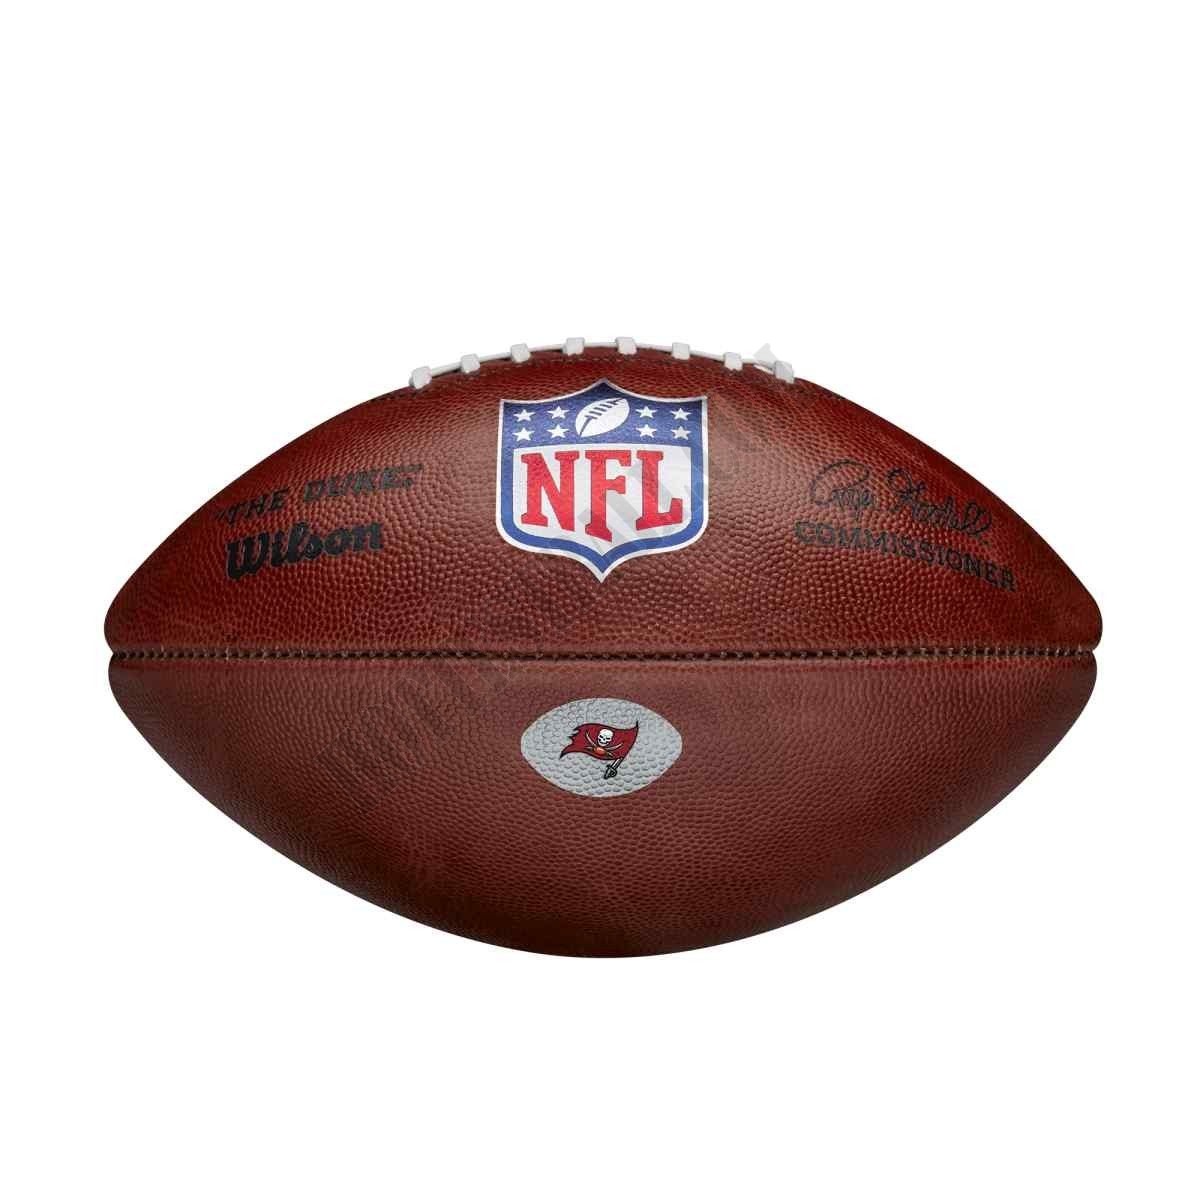 The Duke Decal NFL Football - Tampa Bay Buccaneers ● Wilson Promotions - The Duke Decal NFL Football - Tampa Bay Buccaneers ● Wilson Promotions